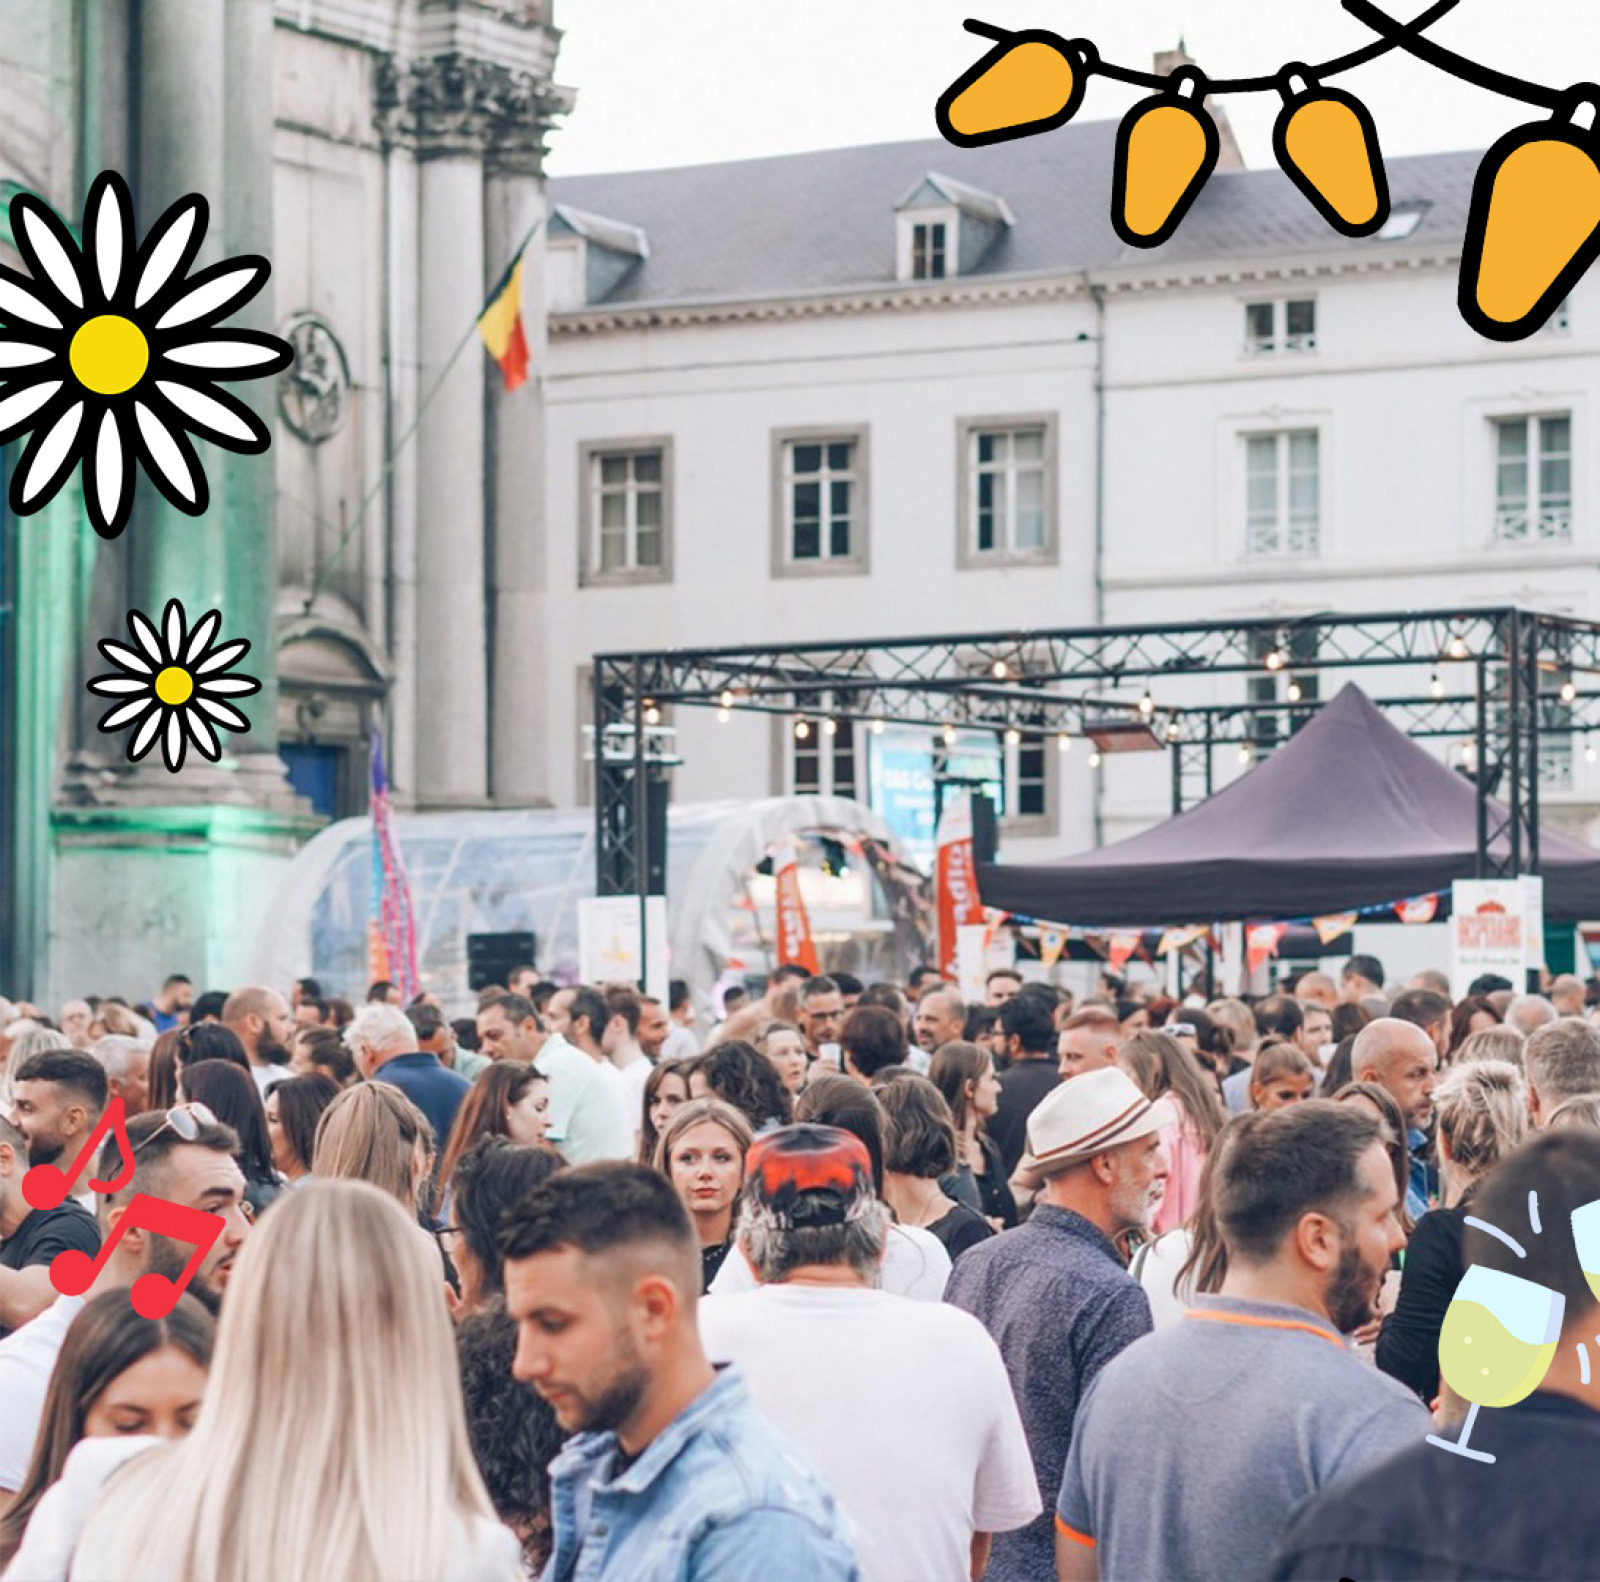 Festival goers gathered on Namur Saint-Aubain square